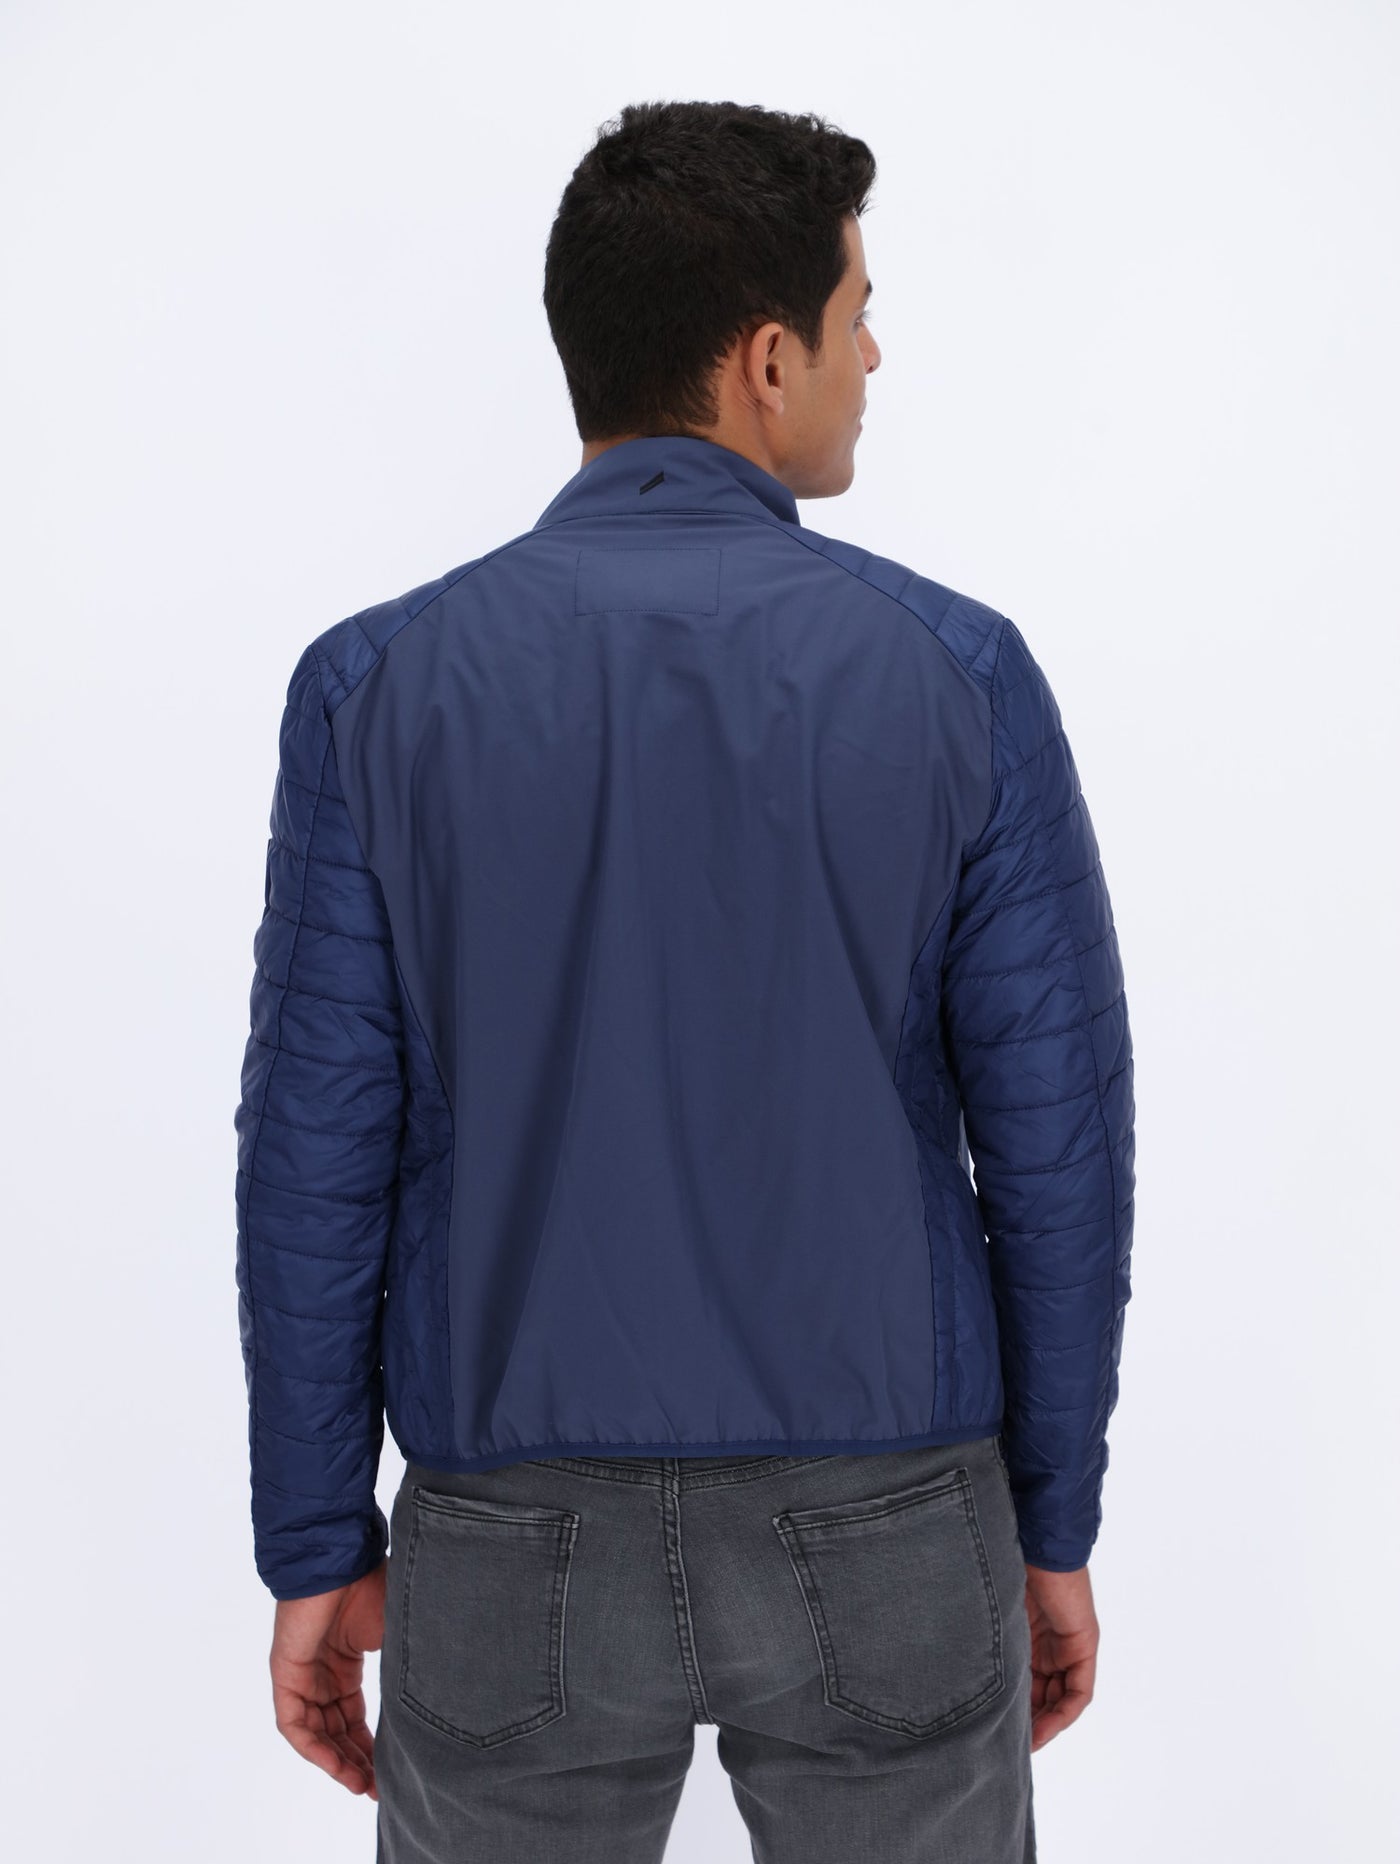 2 Fabrics Raglan Sleeve Jacket